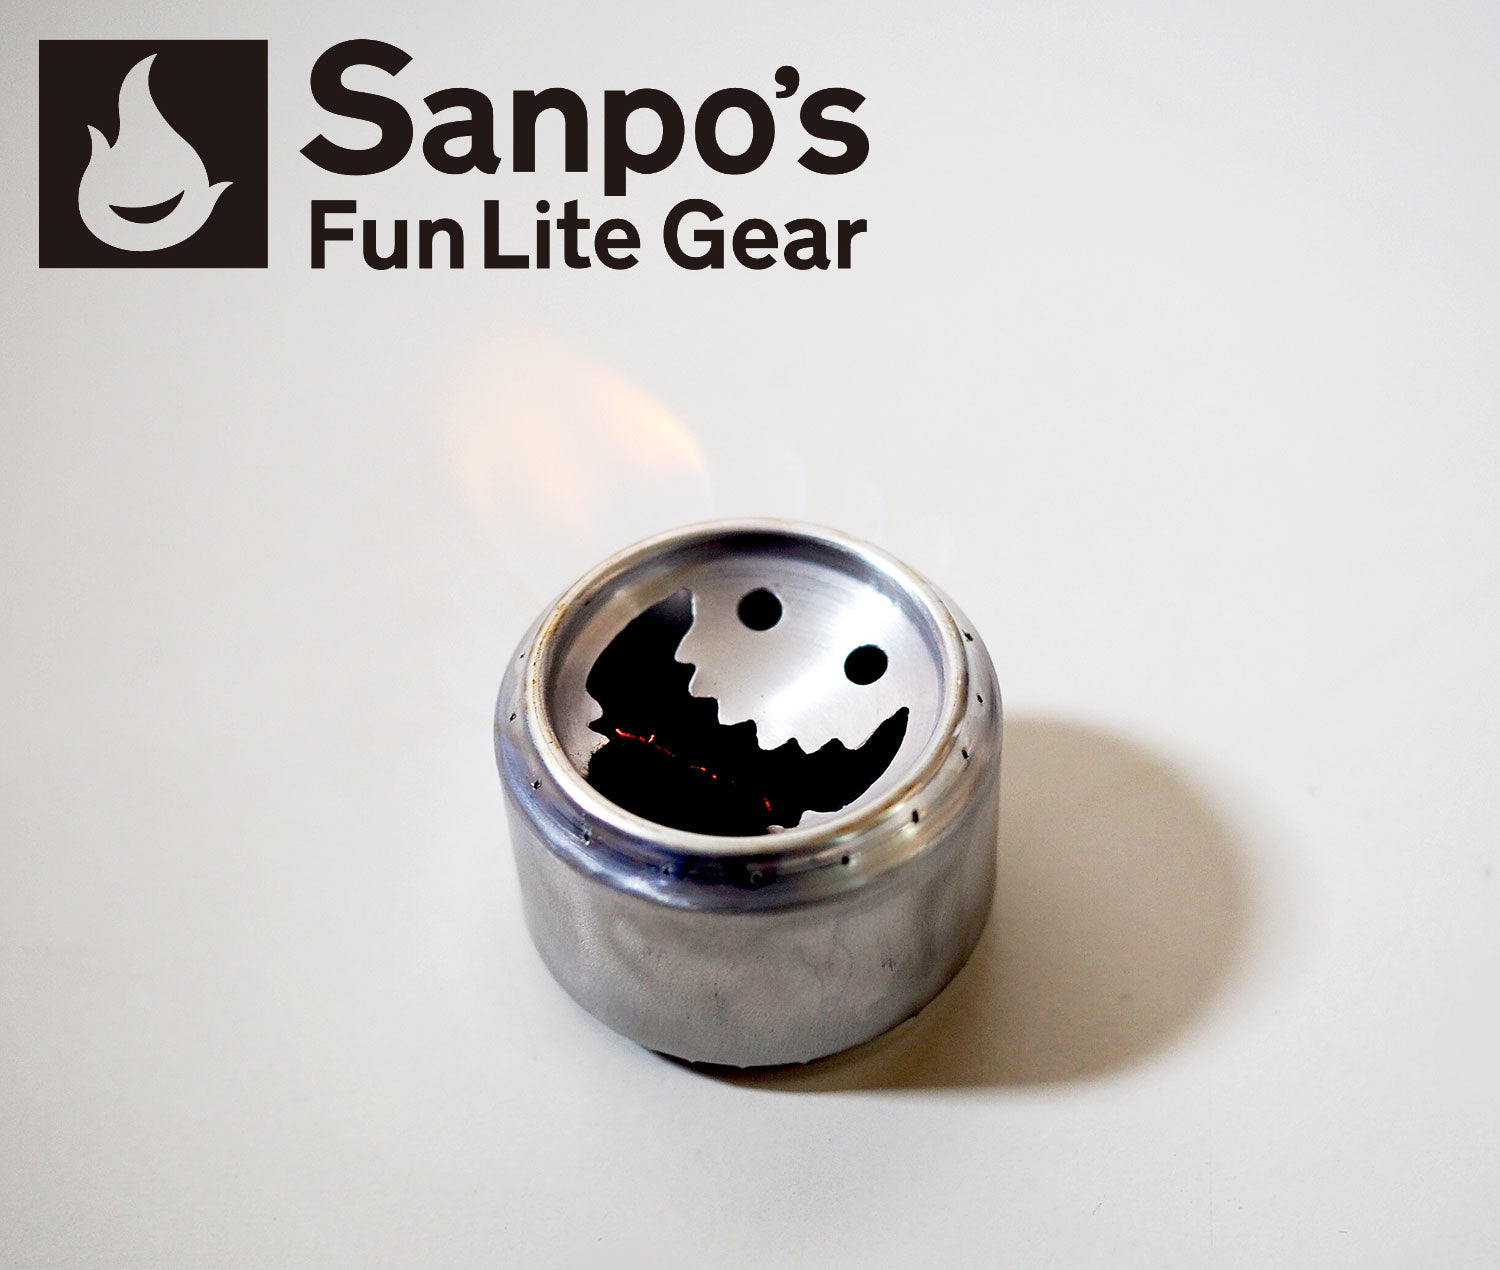 Sanpos' Fun Lite Gear Gr～stove / サンポズファンライトギア ガァァァストーブ